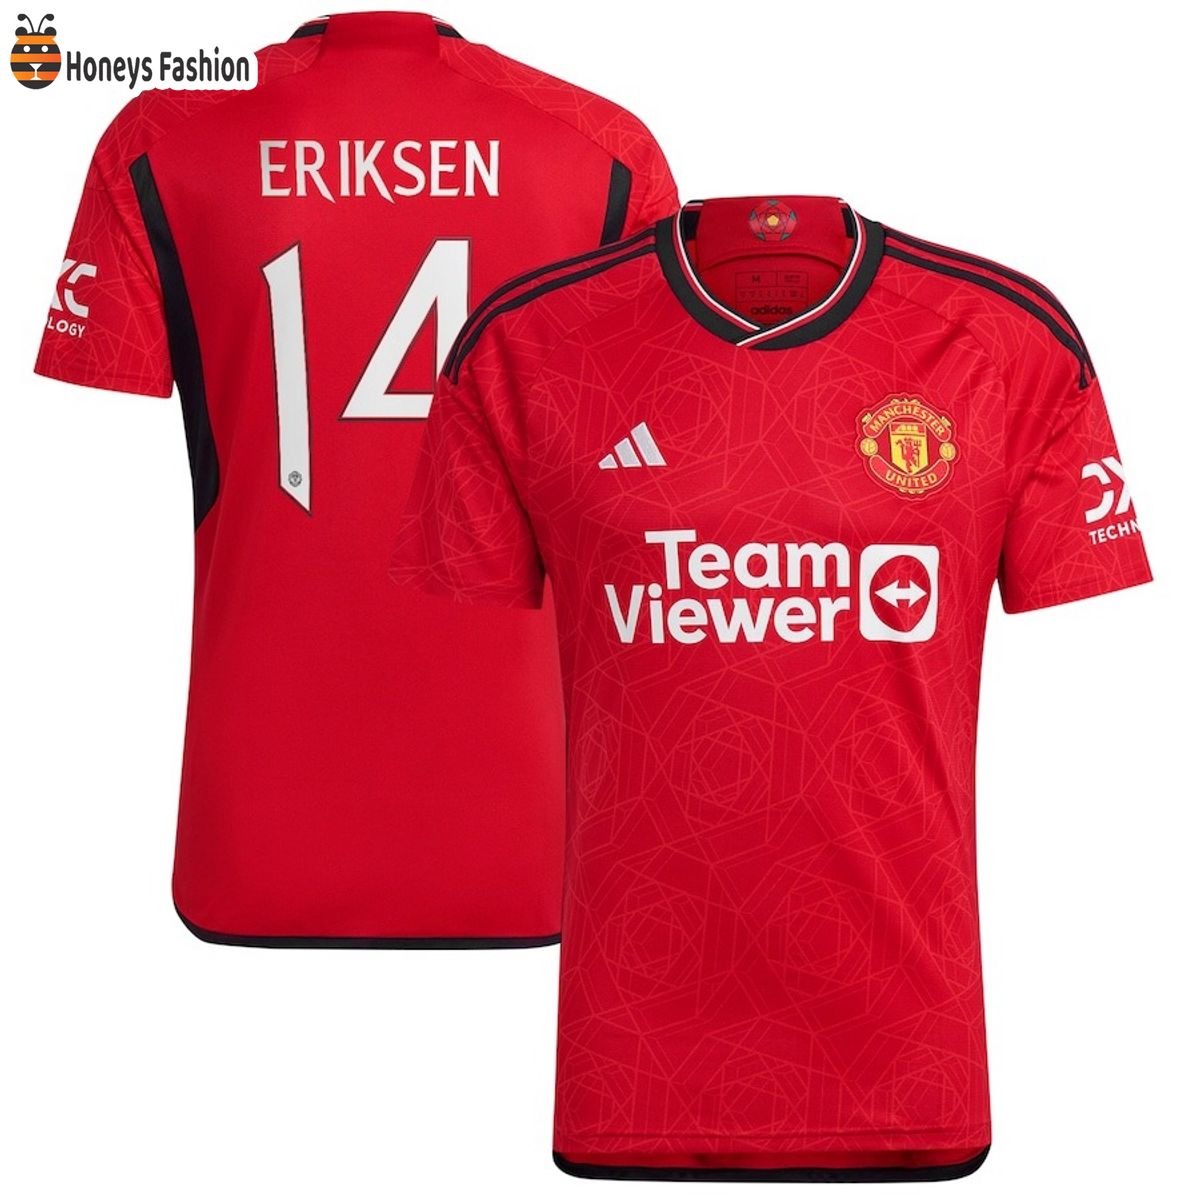 Eriksen 14 Manchester United Premier League 23-24 Jersey